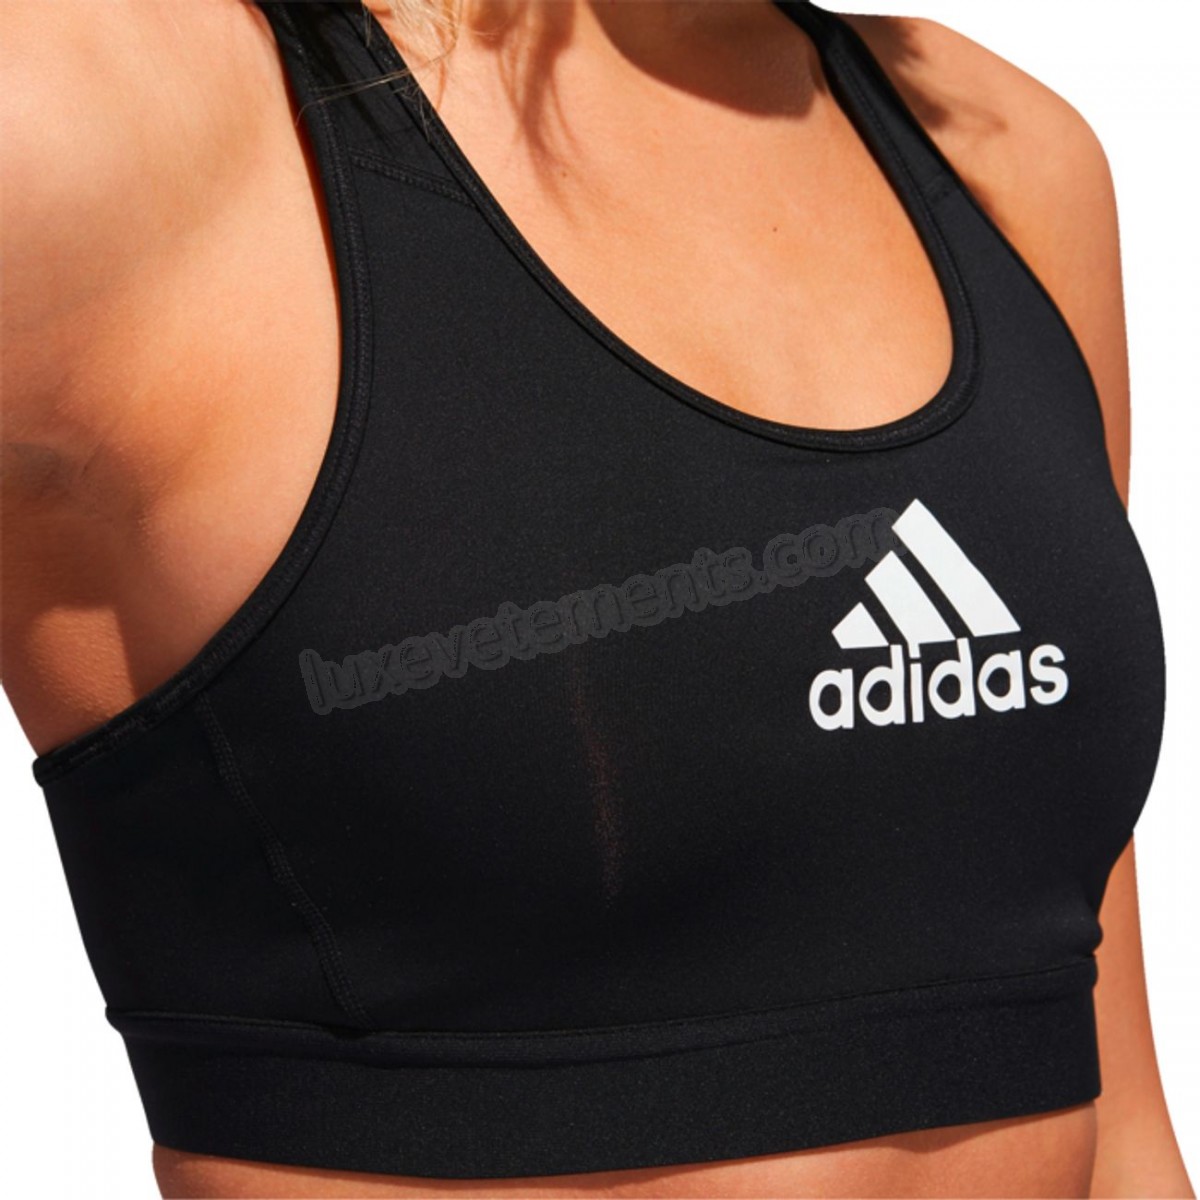 Adidas-DEBARDEUR Fitness femme ADIDAS DRST ASK Vente en ligne - -4